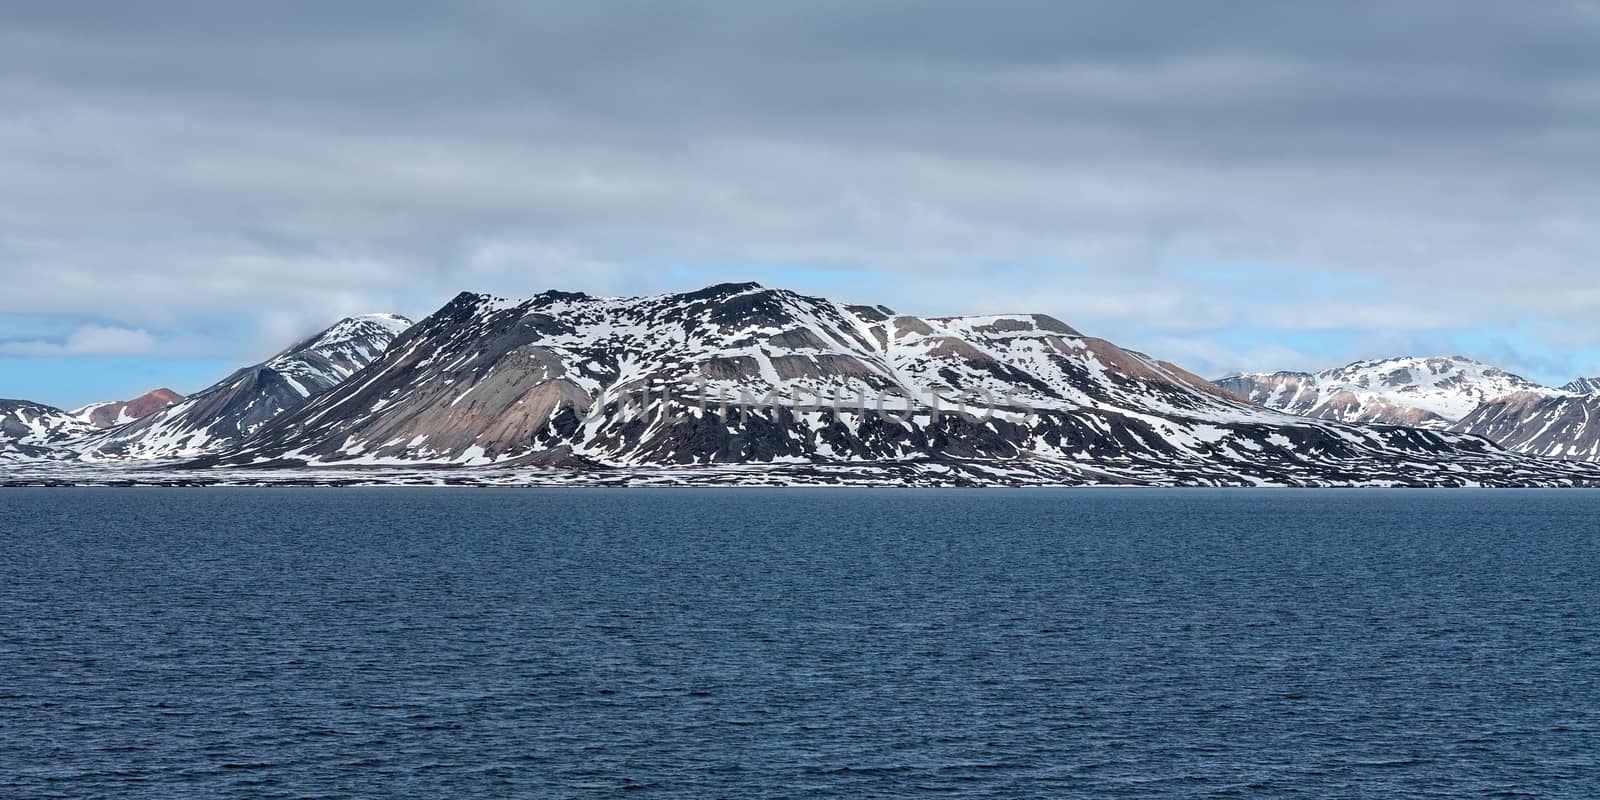 Mountain range in Svalbard islands, Norway by LuigiMorbidelli